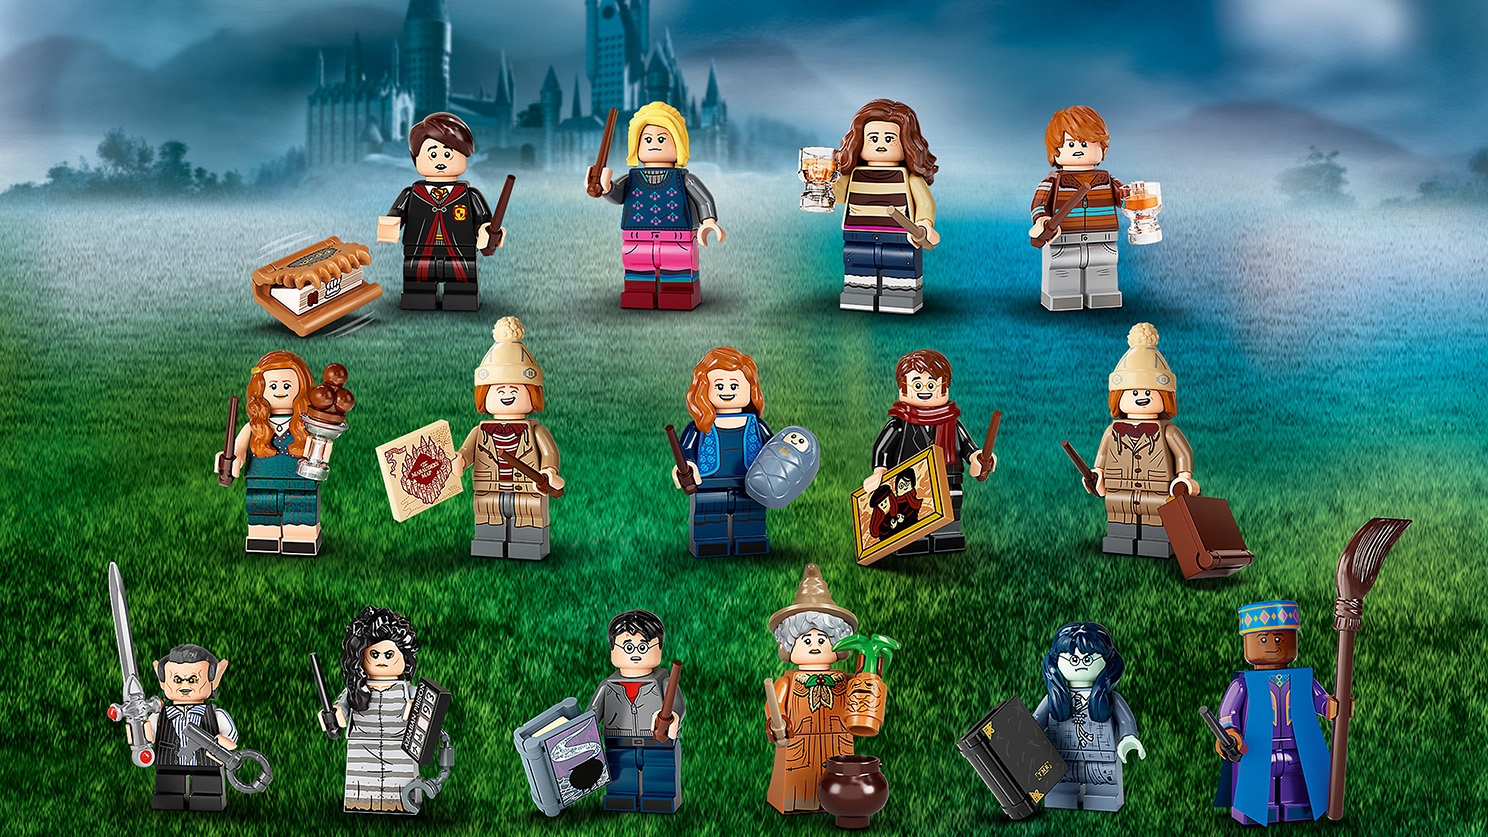 LEGO NEW Minifigure George Weasley 71028 Harry Potter Minifigures